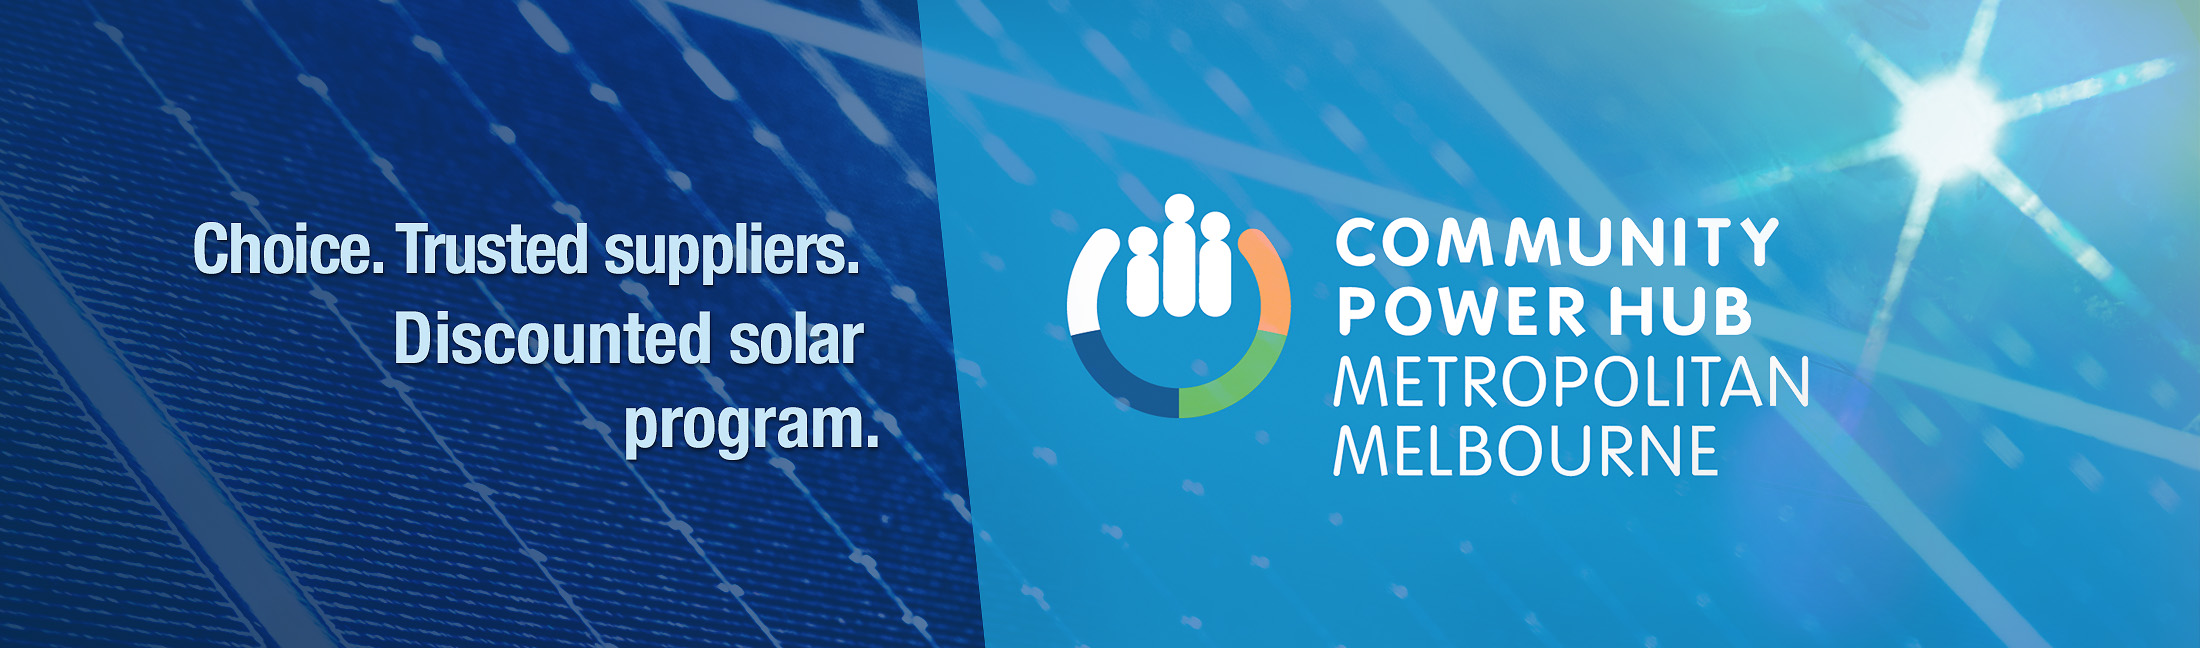 Metro Community Power Hub Solarb Program information header